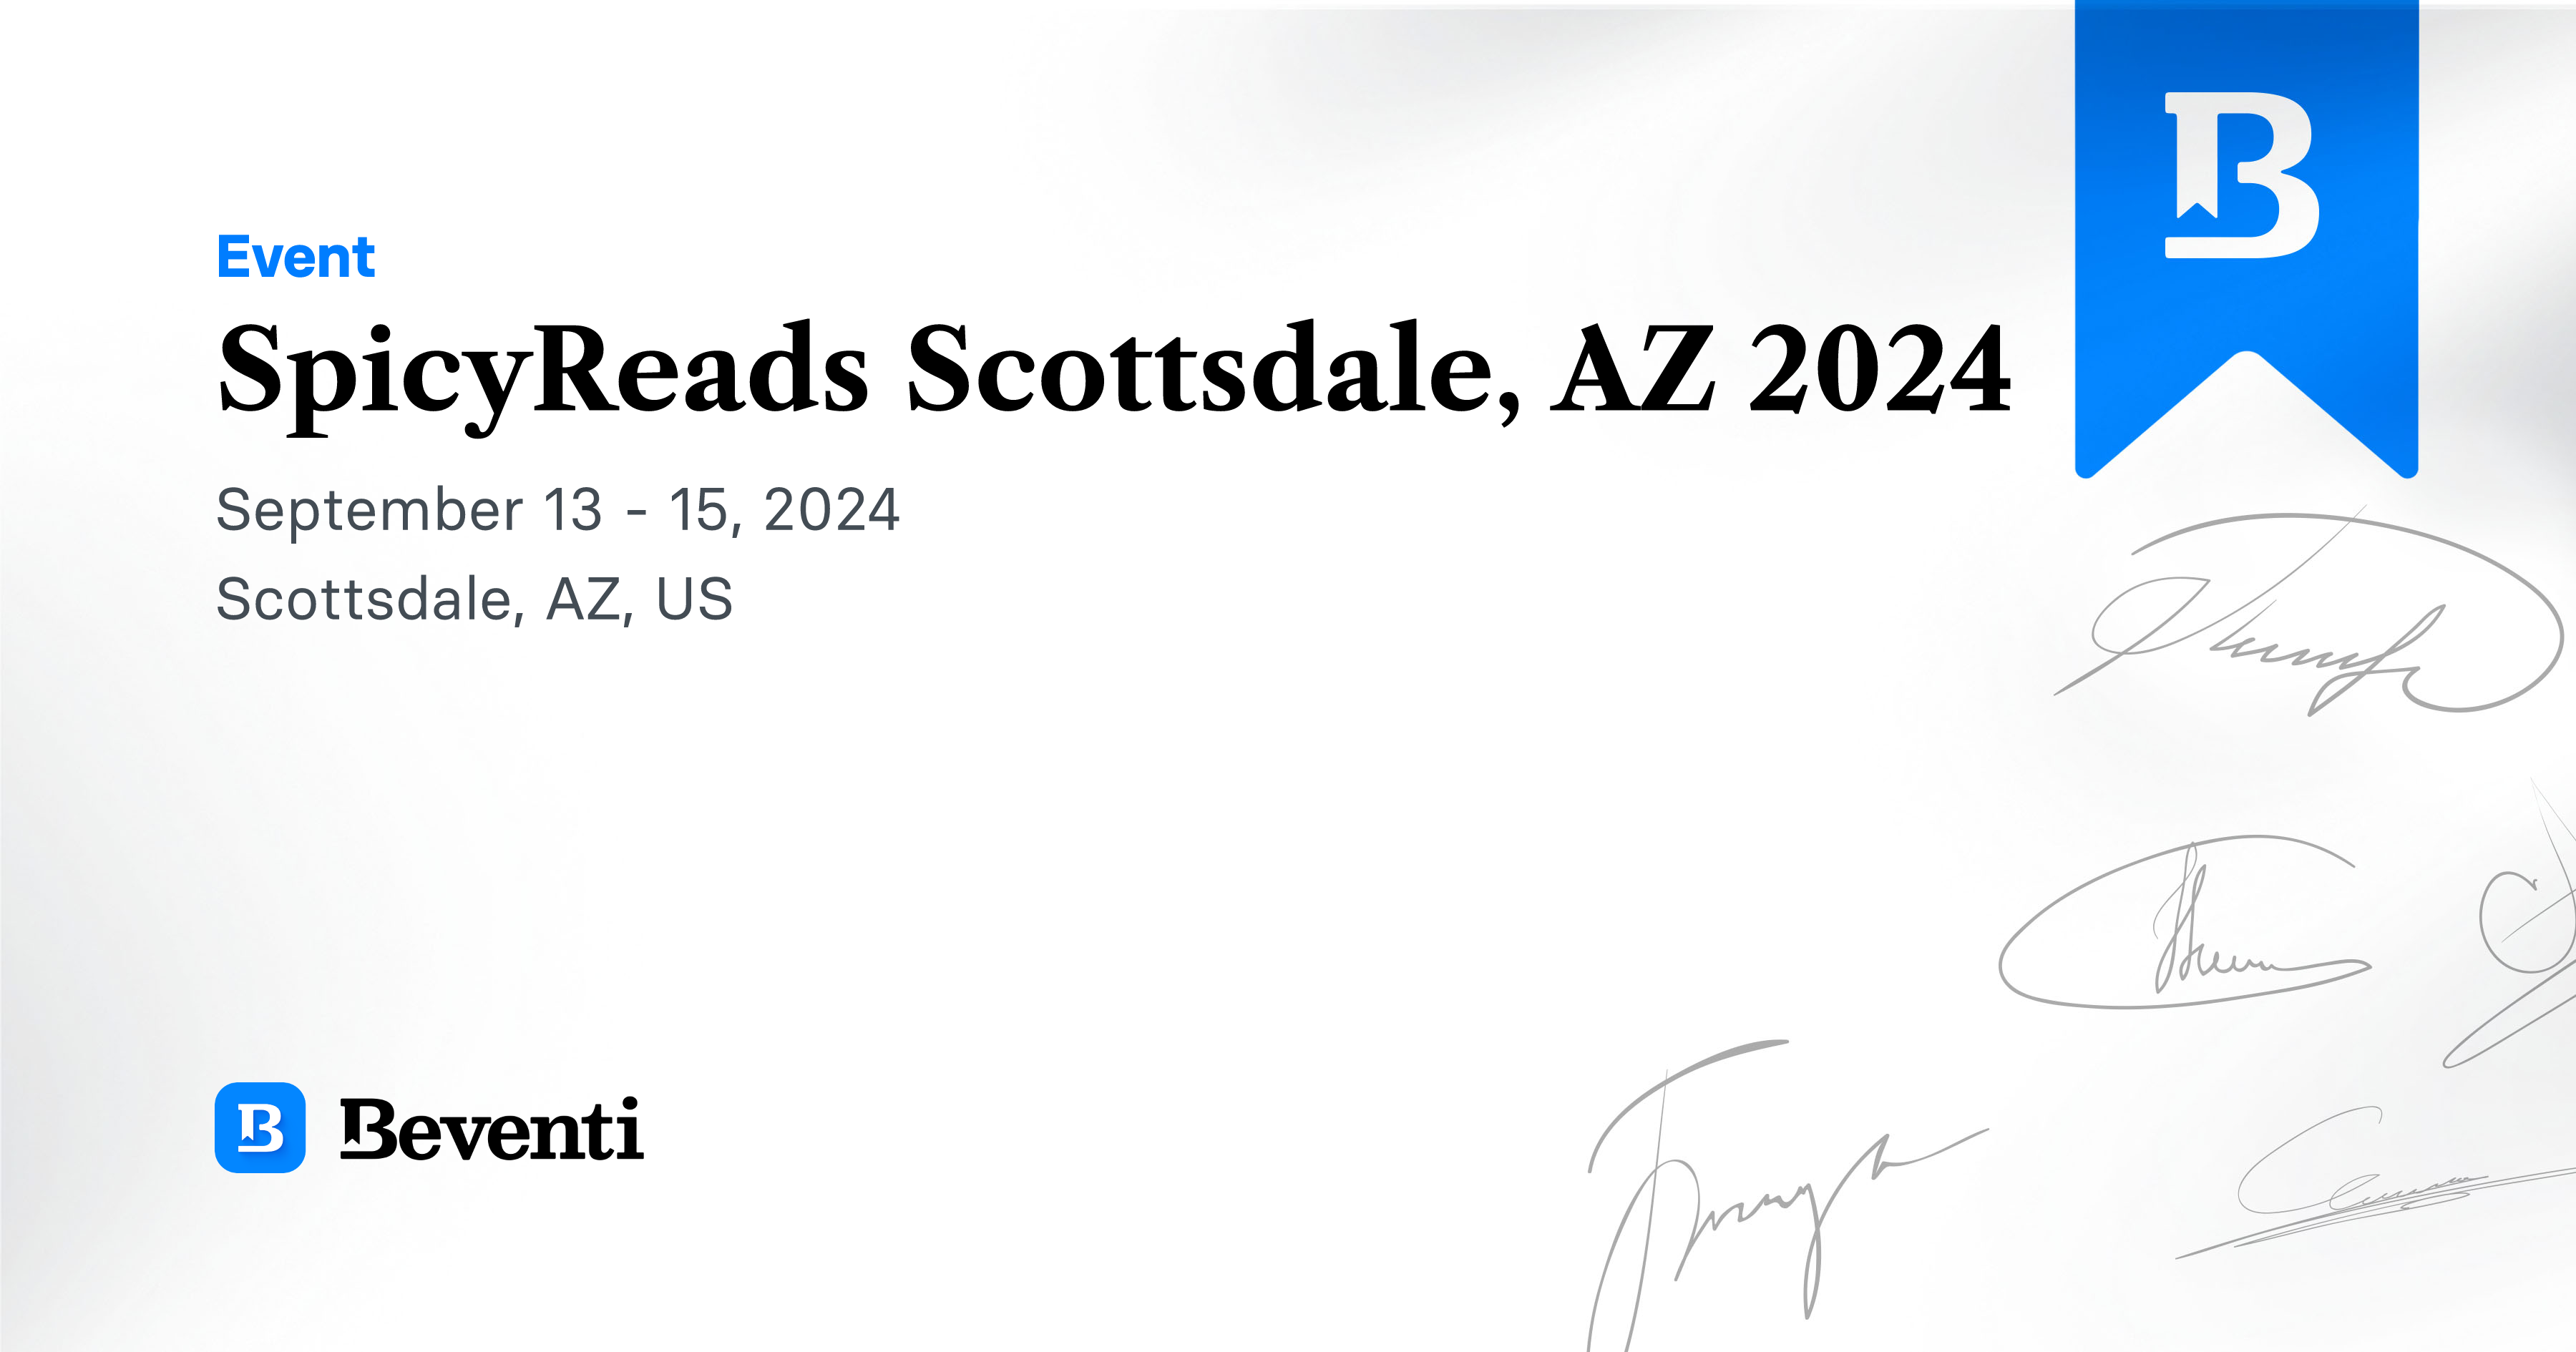 SpicyReads Scottsdale, AZ 2024 Beventi